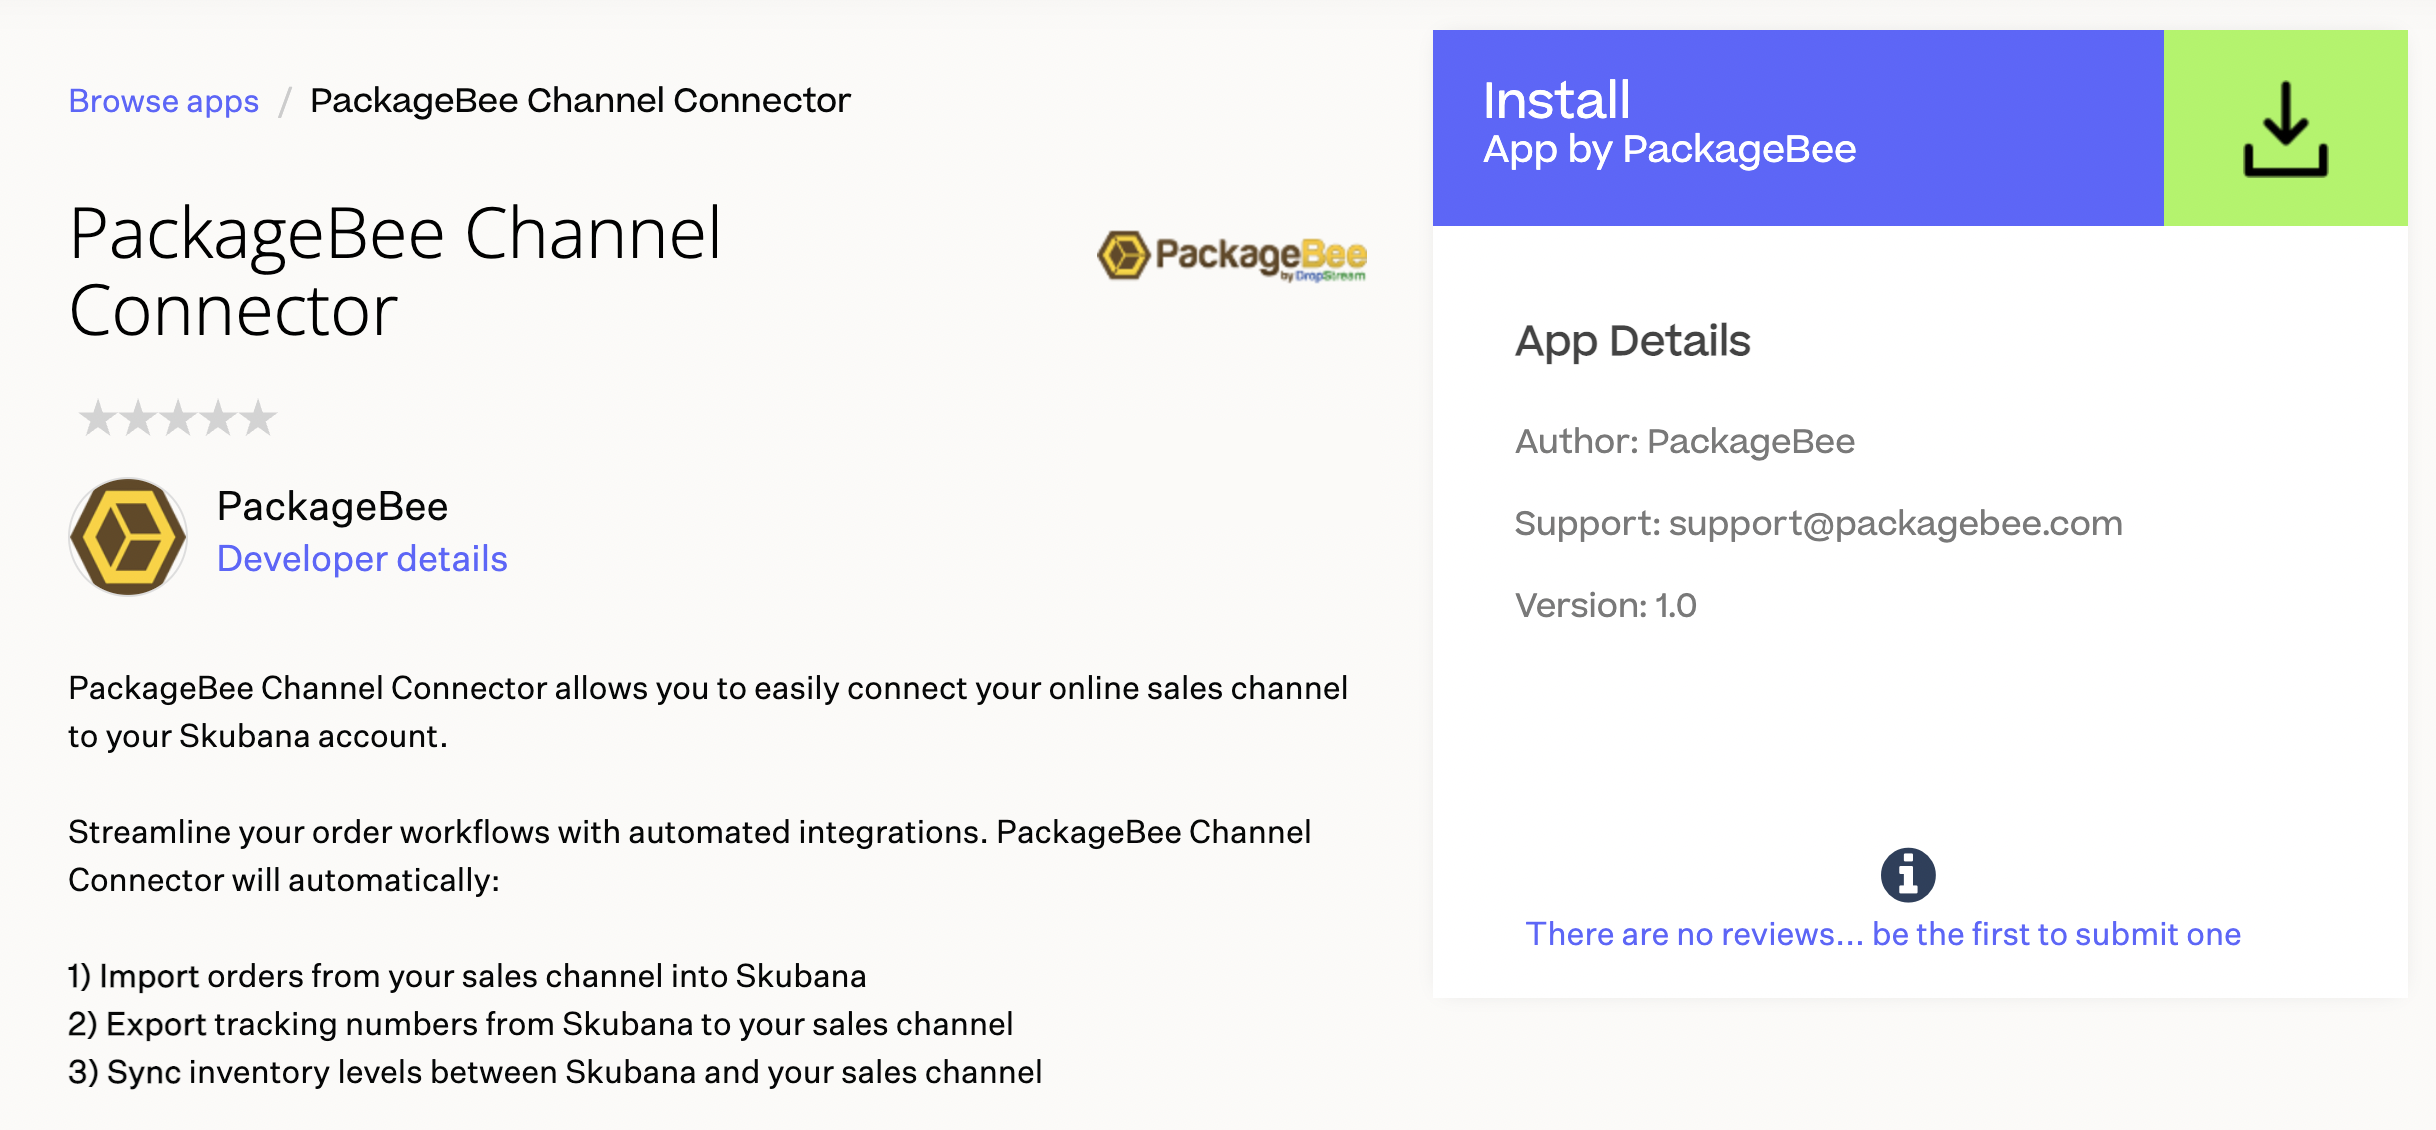 Install the PackageBee Channel Connector app in Skubana